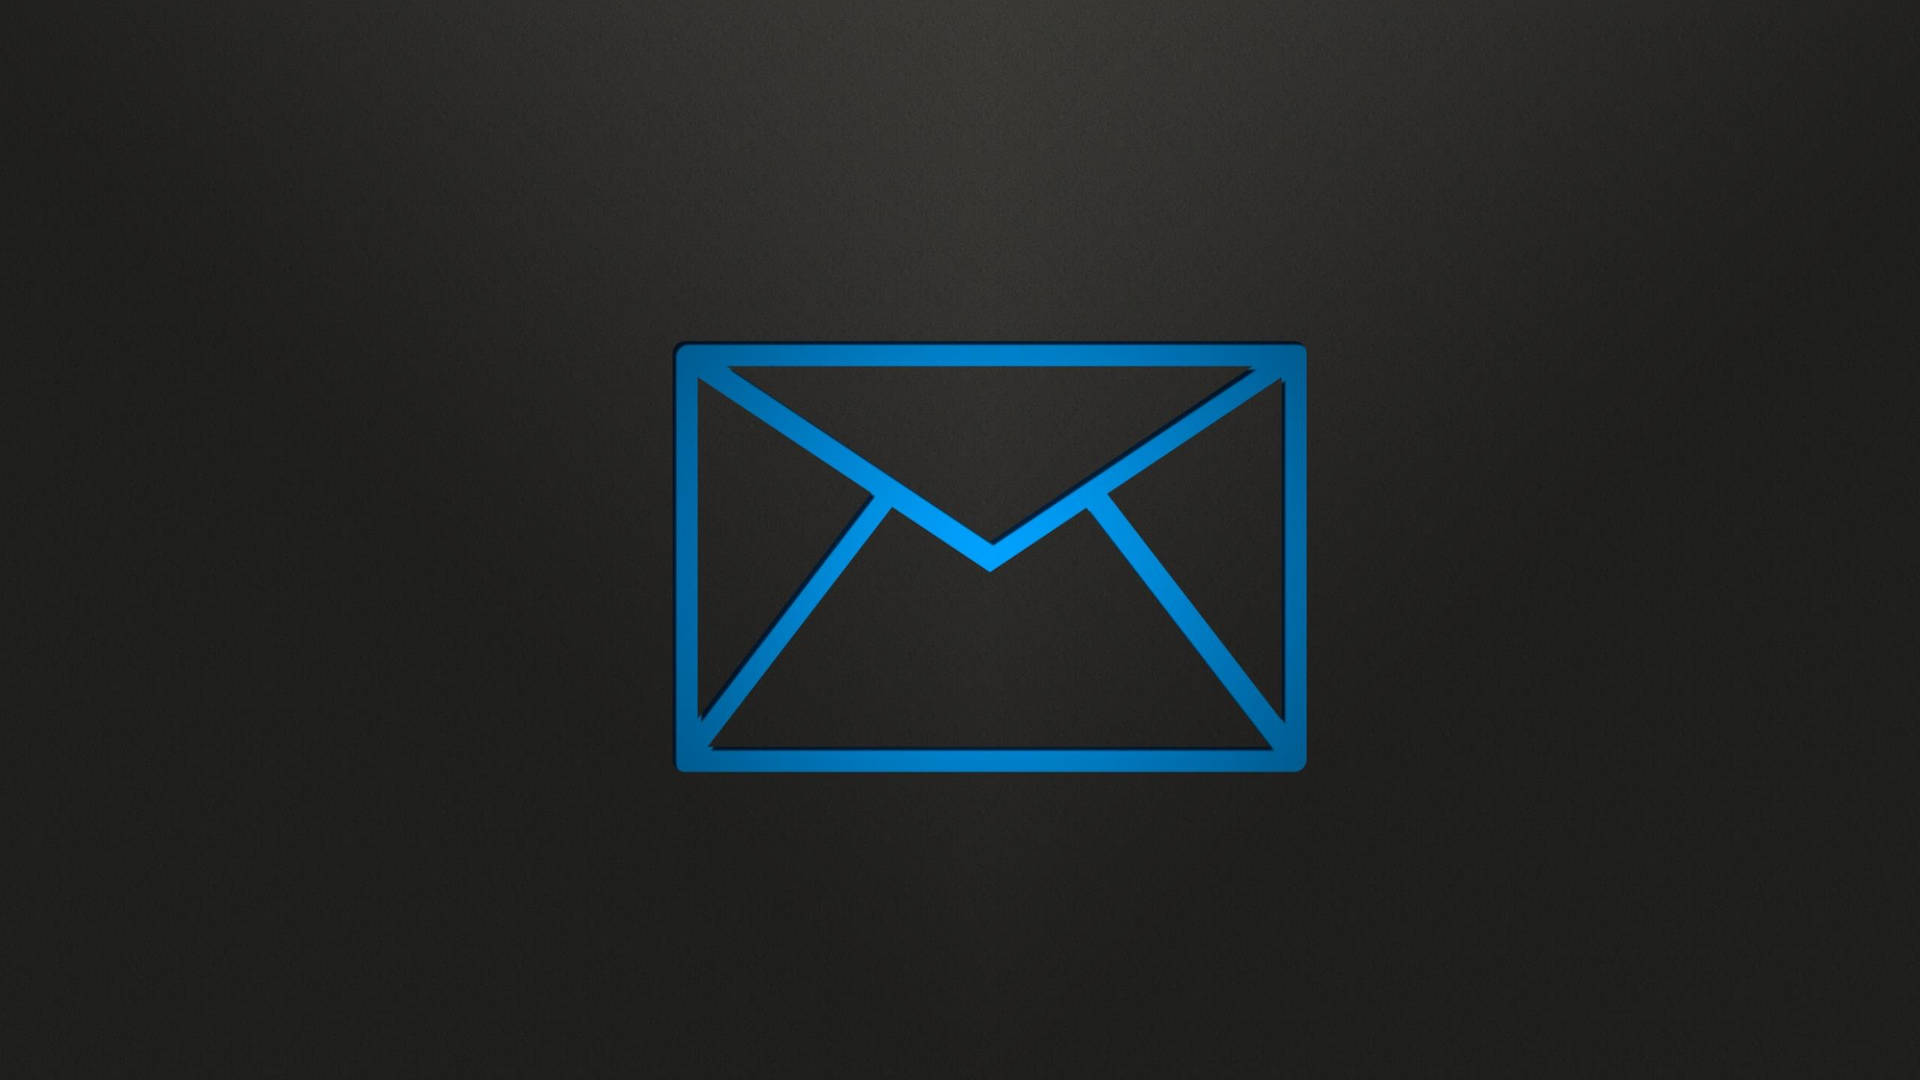 Email Blaues Computer-symbol Wallpaper